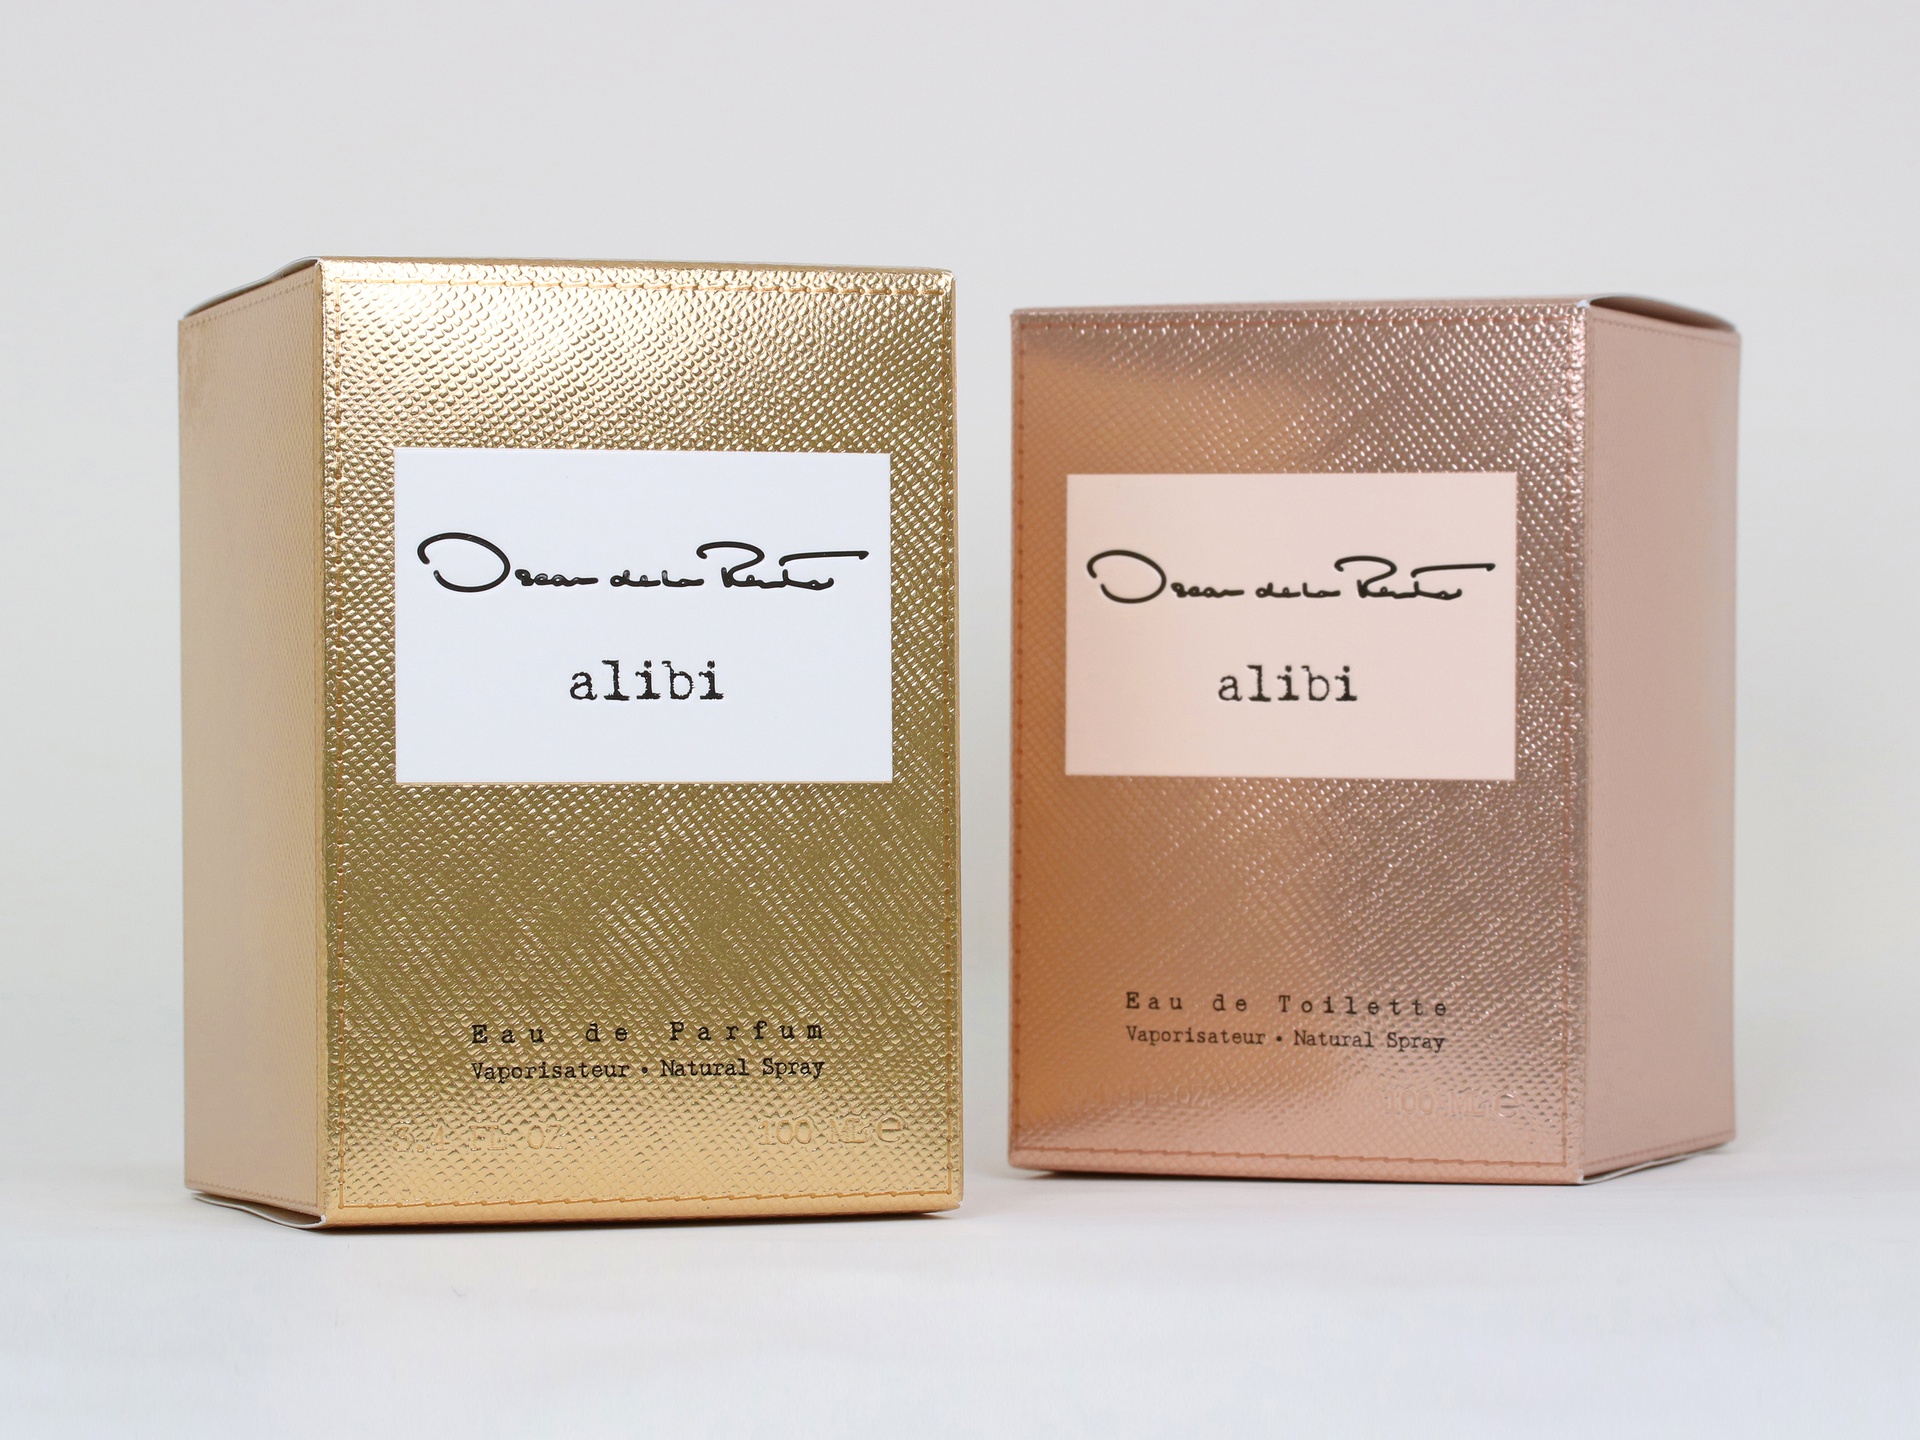 Oscar de la Renta Alibi folding cartons feature cold foiling and embossing.